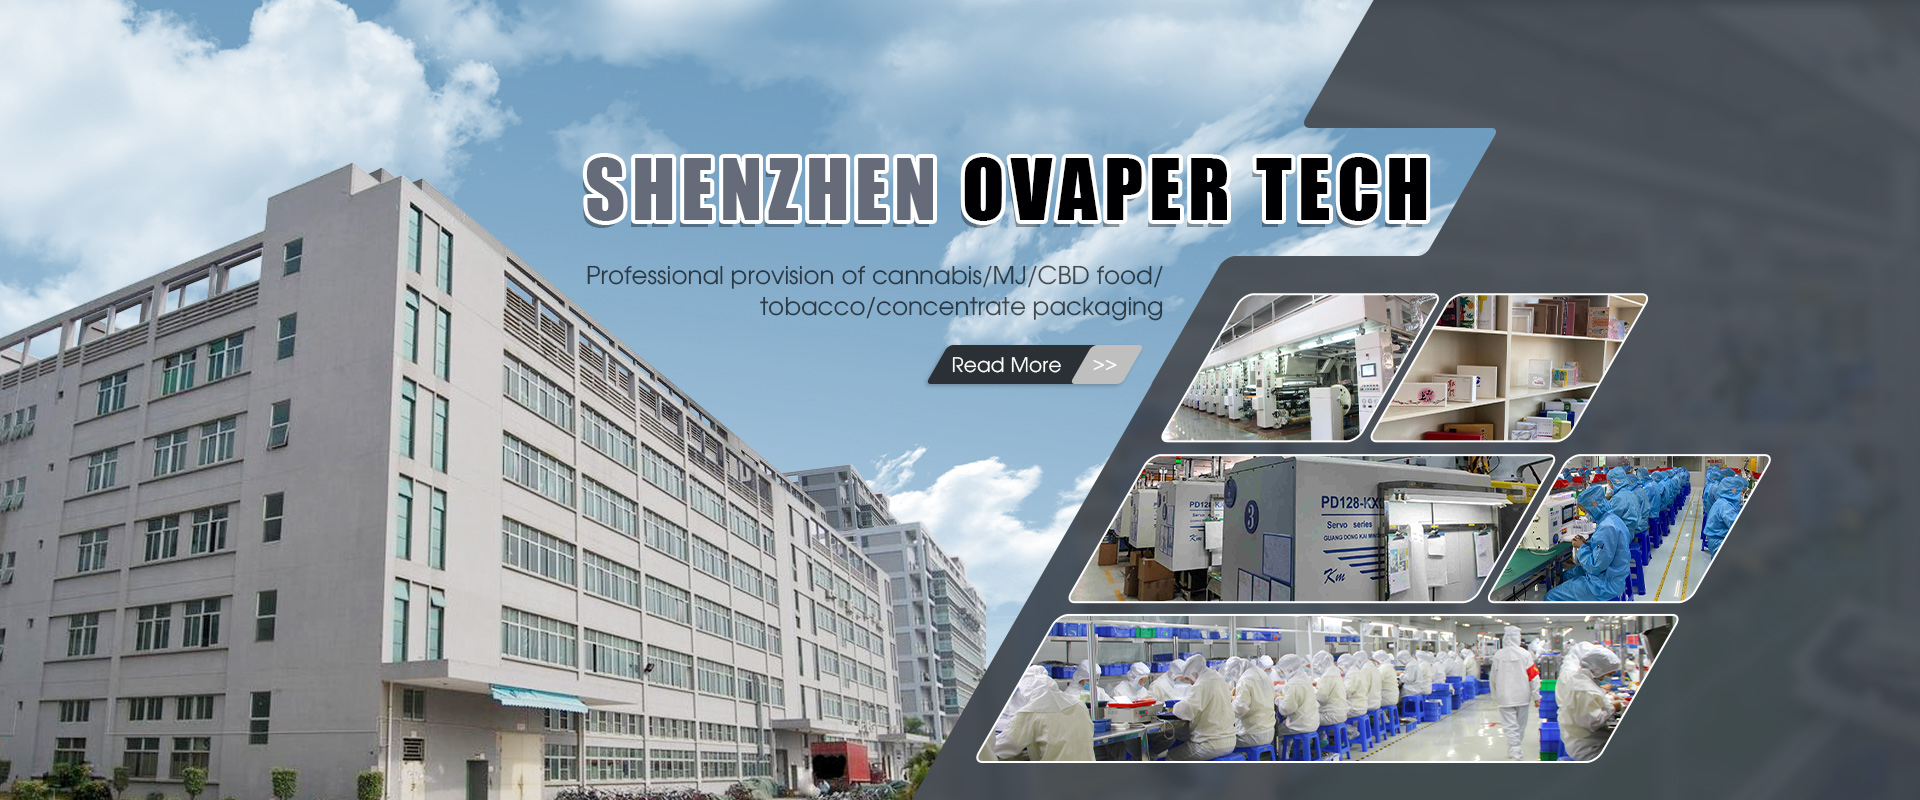 Mengenai Ovaper Tech